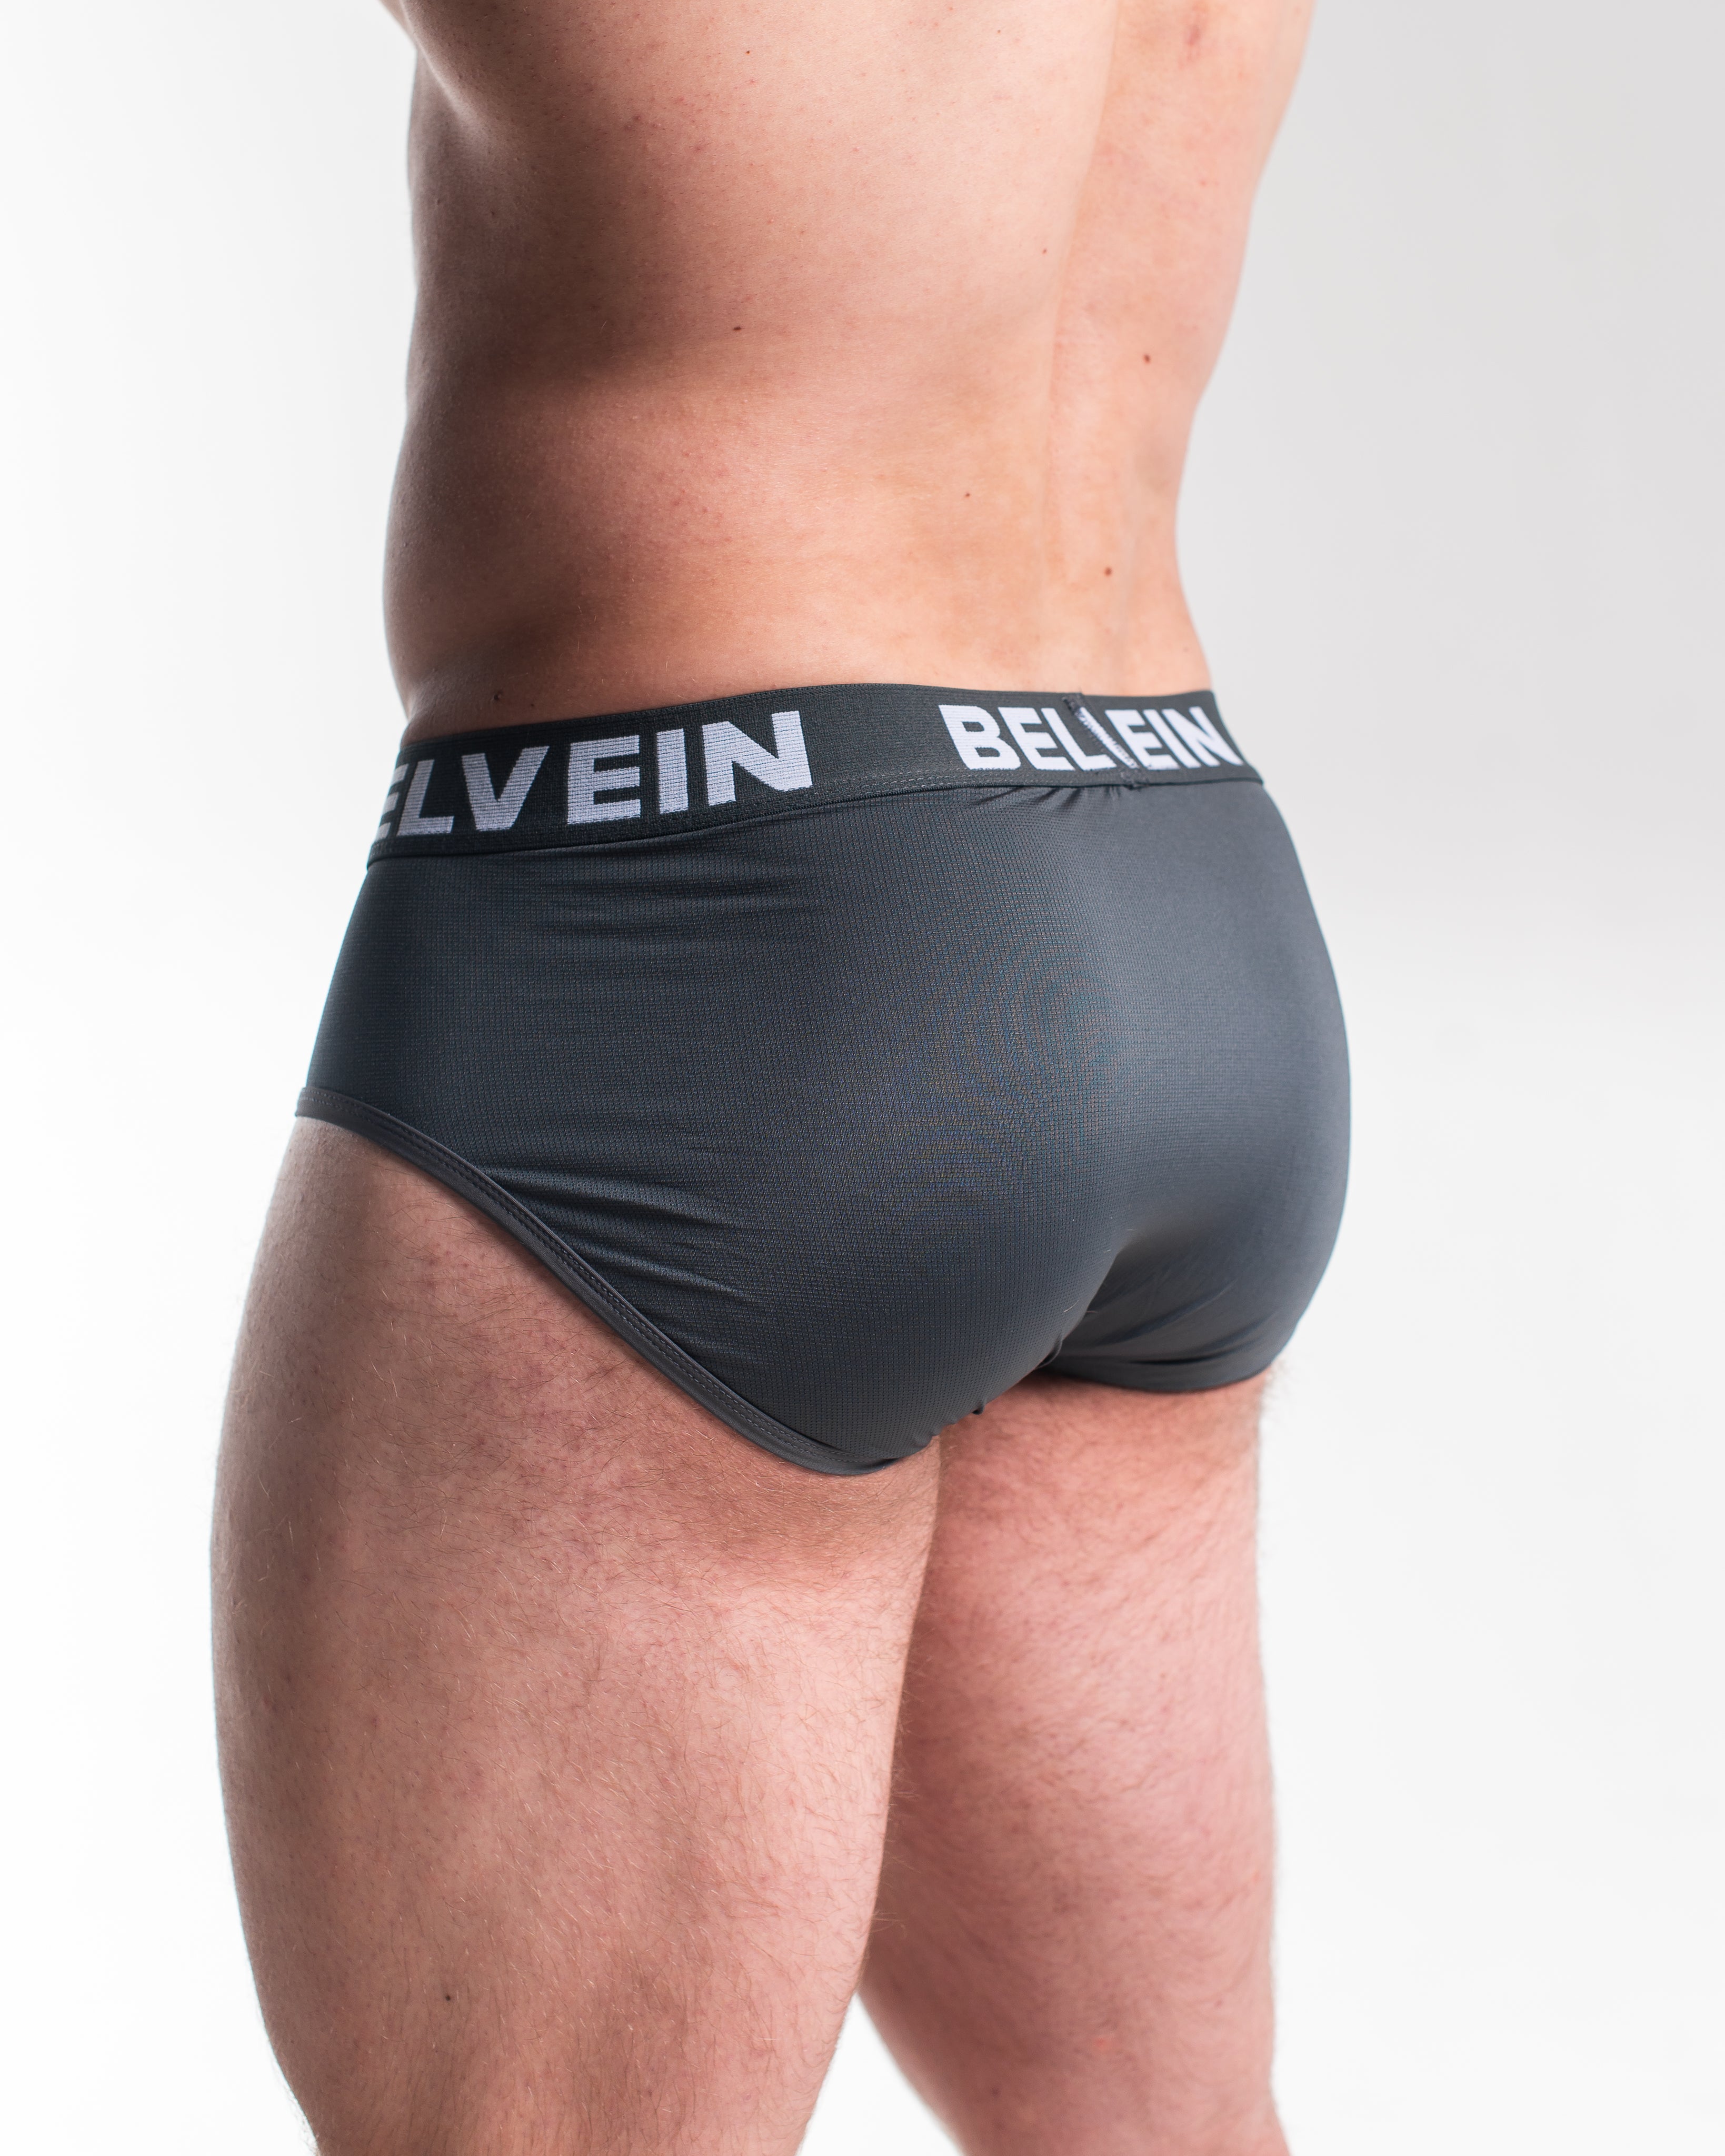 SLIP BELGE, Men's underwear custom made with premium European fabrics